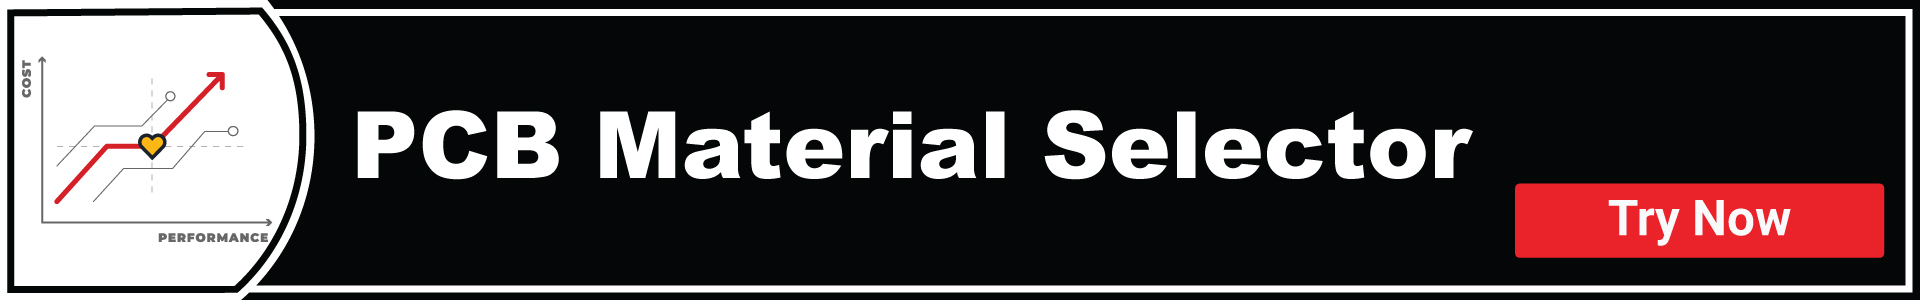 sierra-circuits-material-selector-tool-banner.jpg